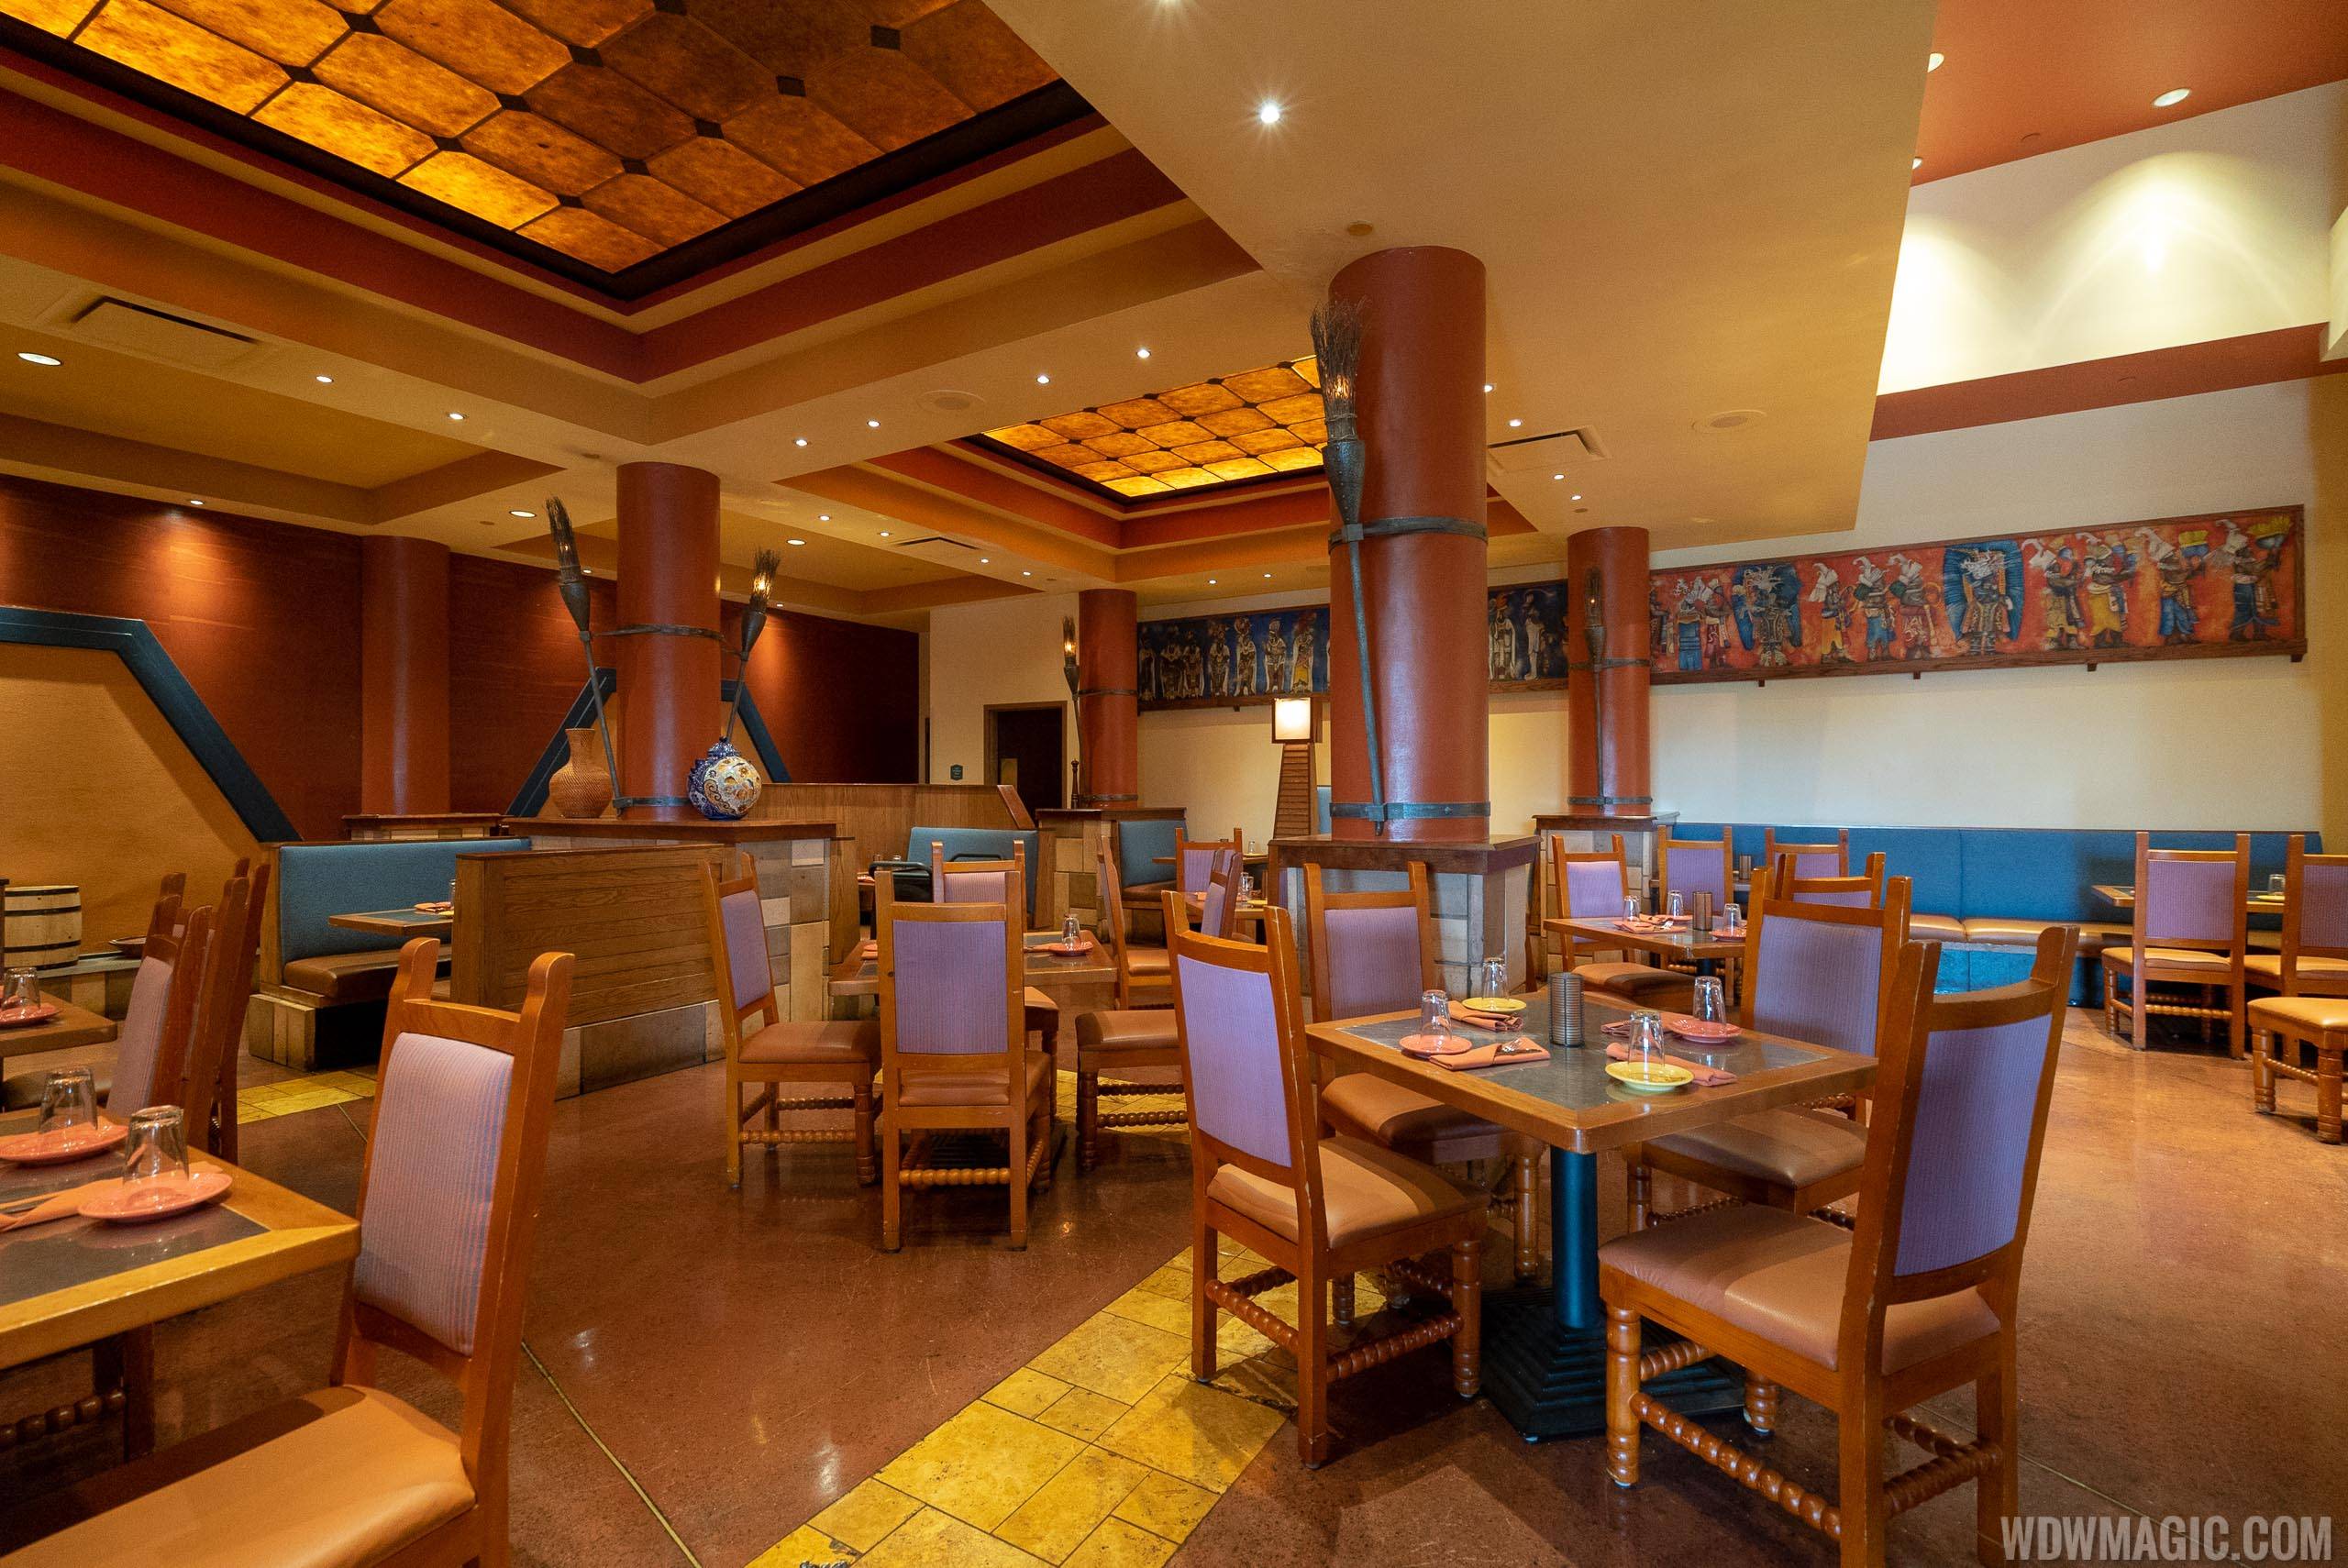 Maya Grill breakfast to change from buffet to a la carte menu at Coronado Springs Resort